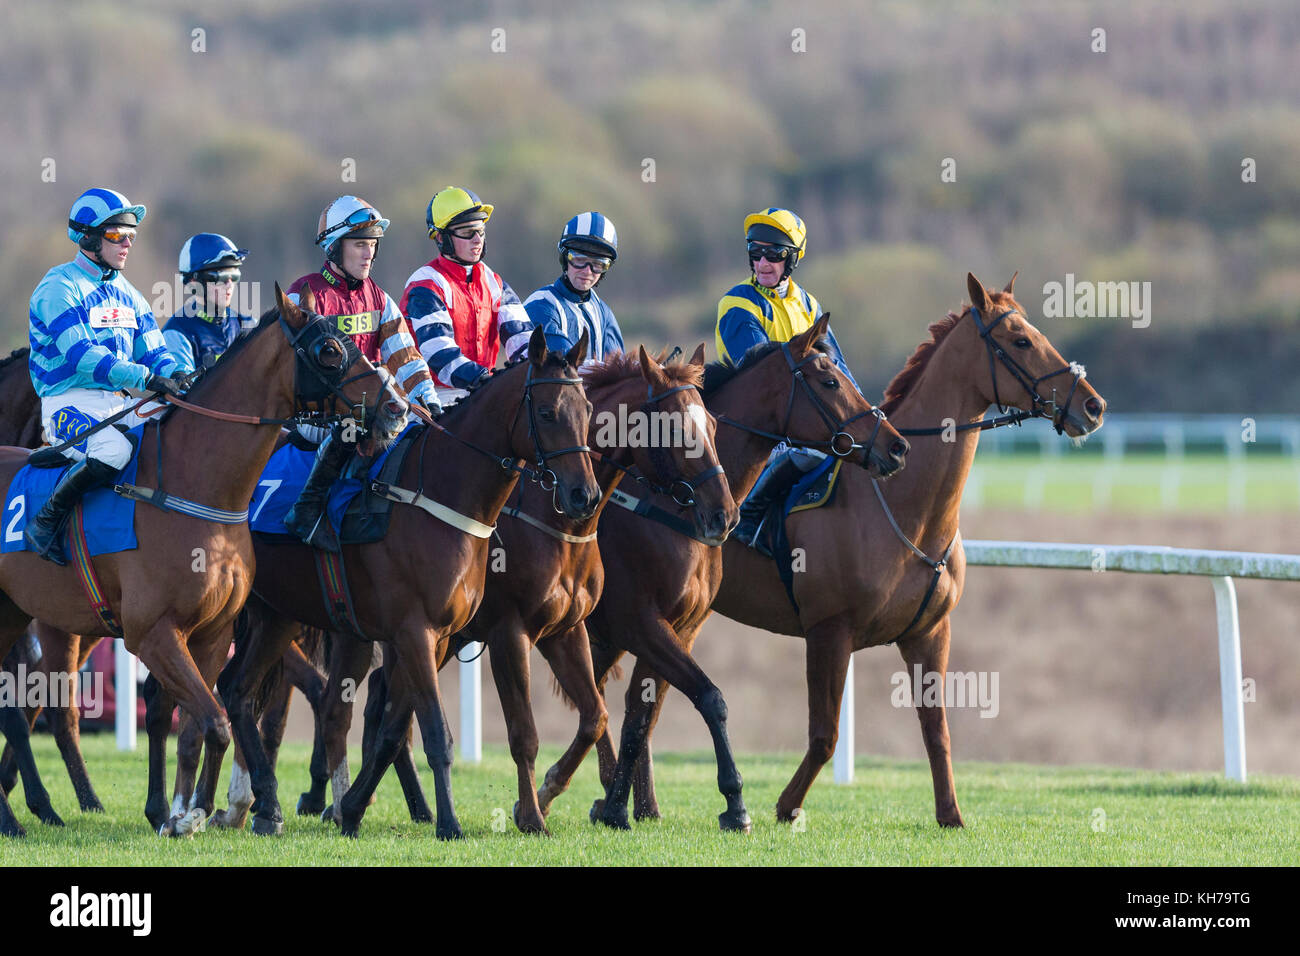 Jockeys and horses prepare to start a race at Ffos Las, Trimsaran, Carmarthenshire, Wales wearing bright, colourful racing colours / racing silks Stock Photo